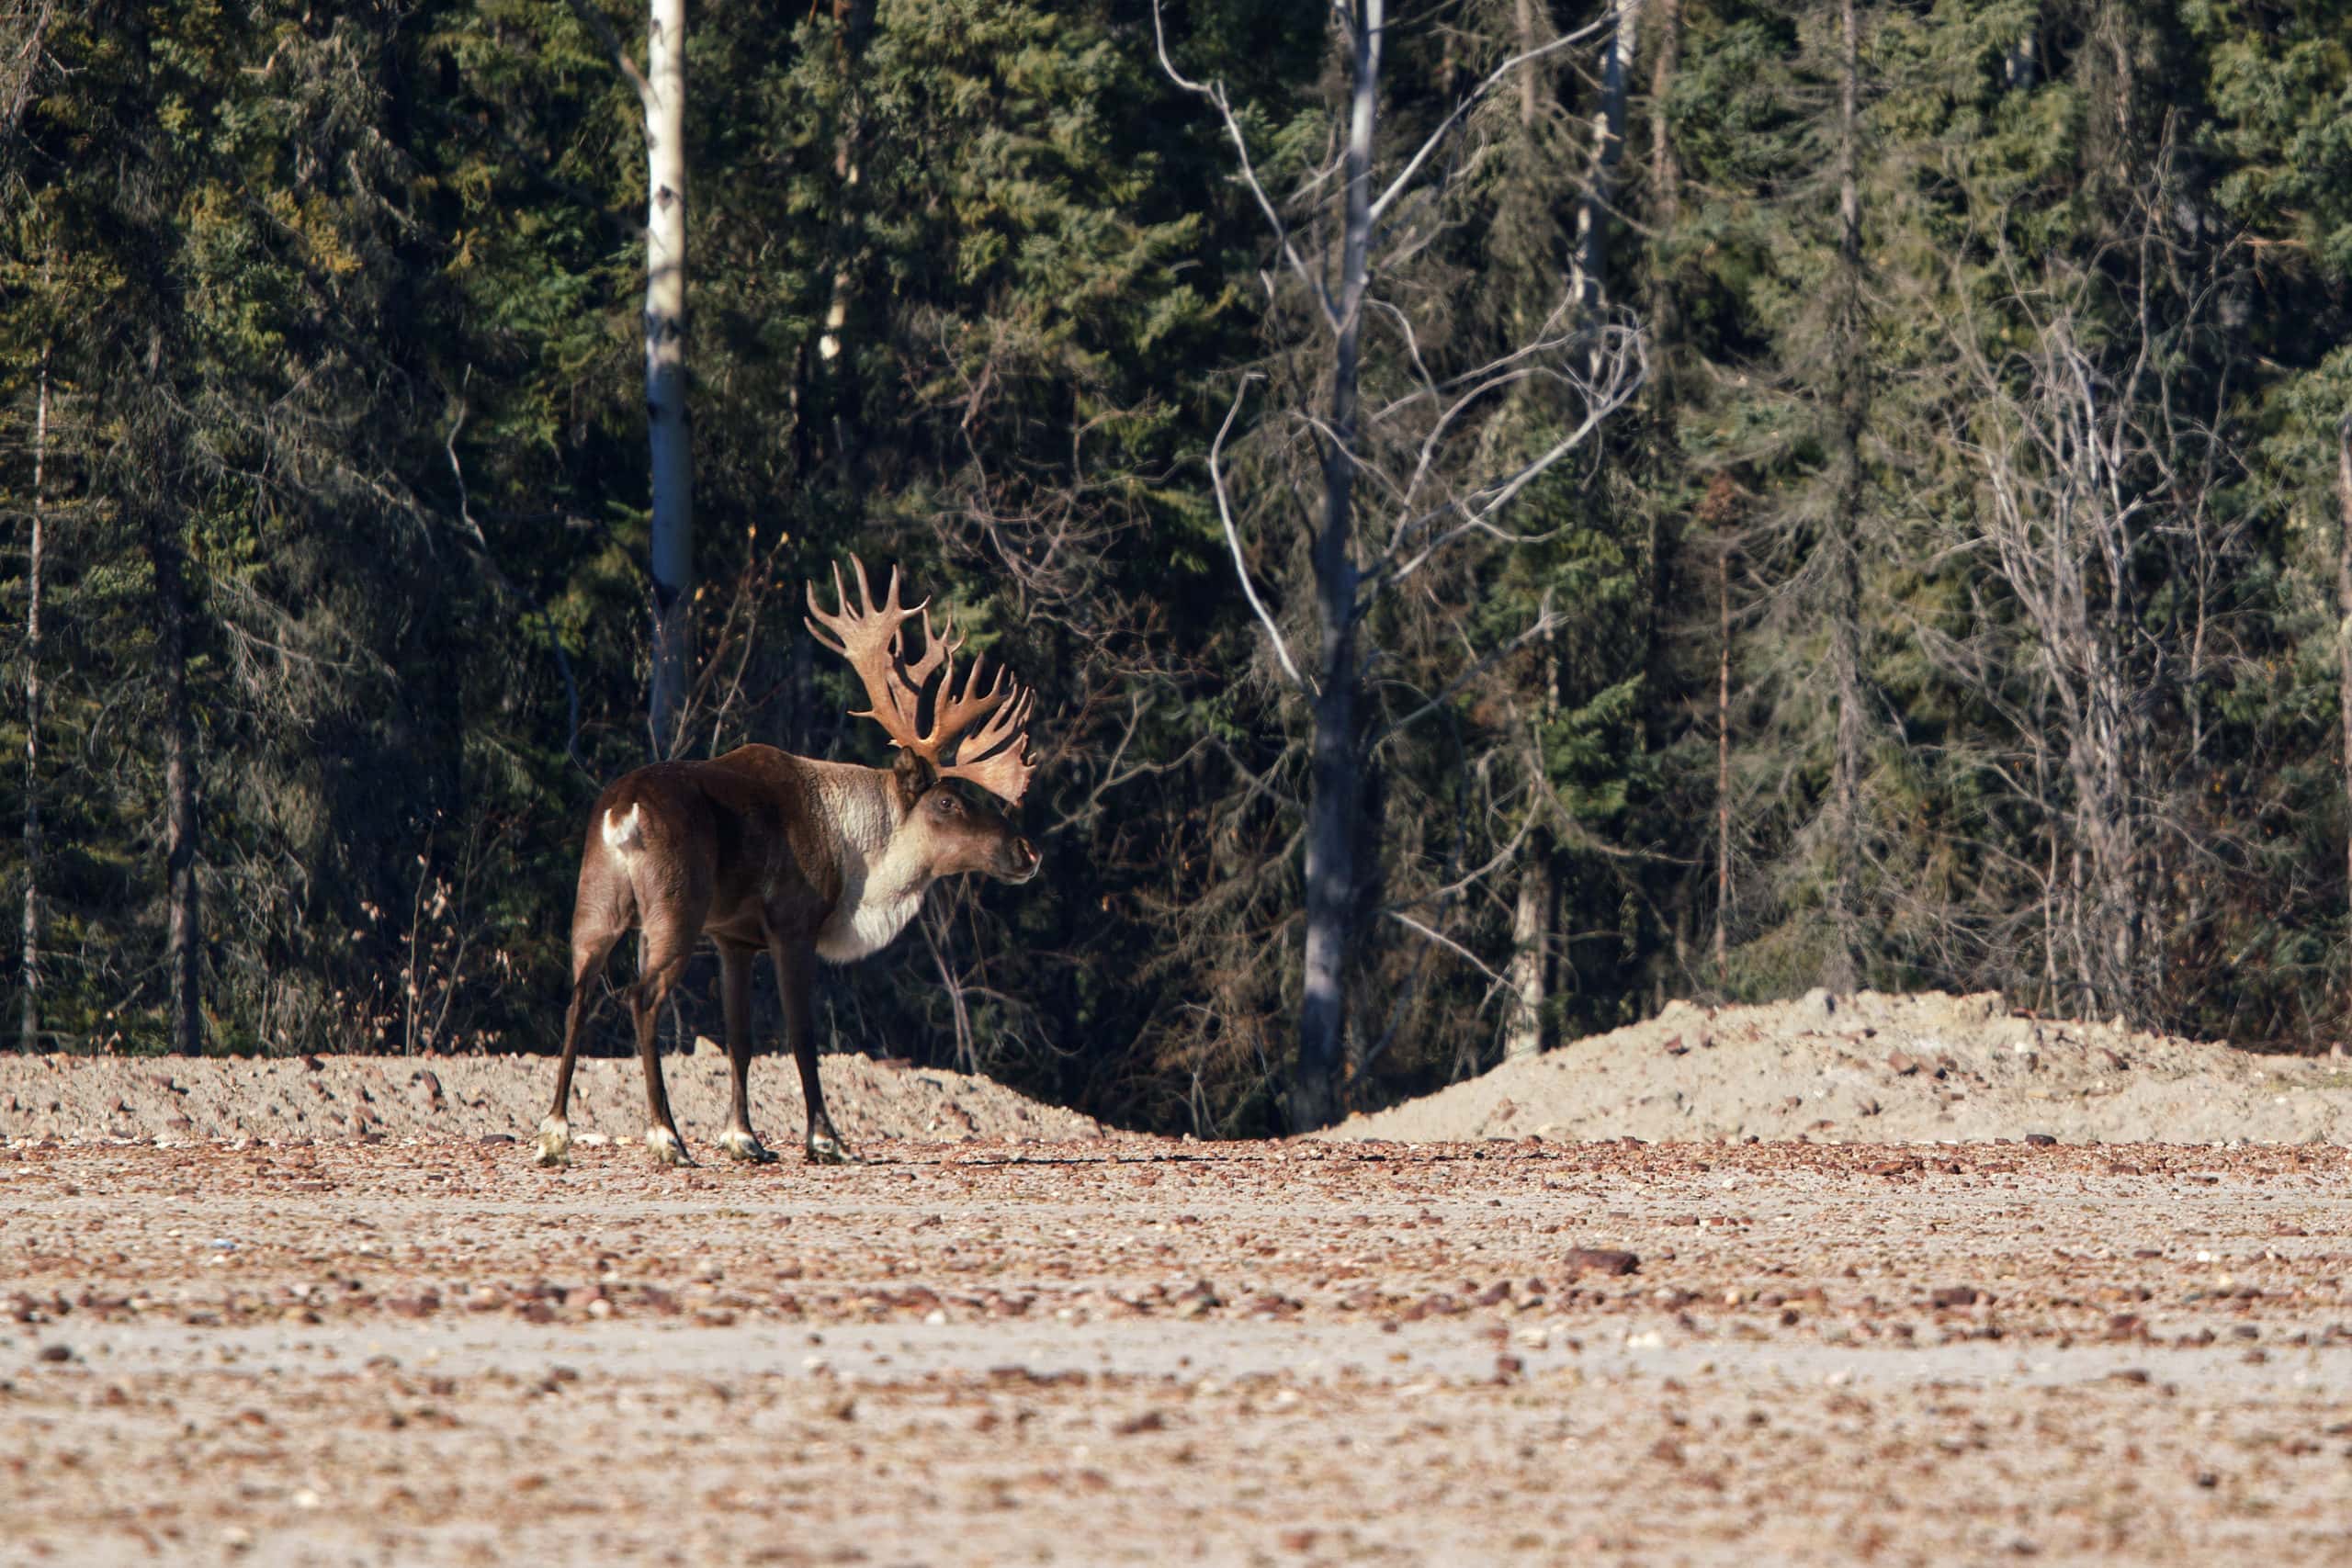 A moose standing in a field